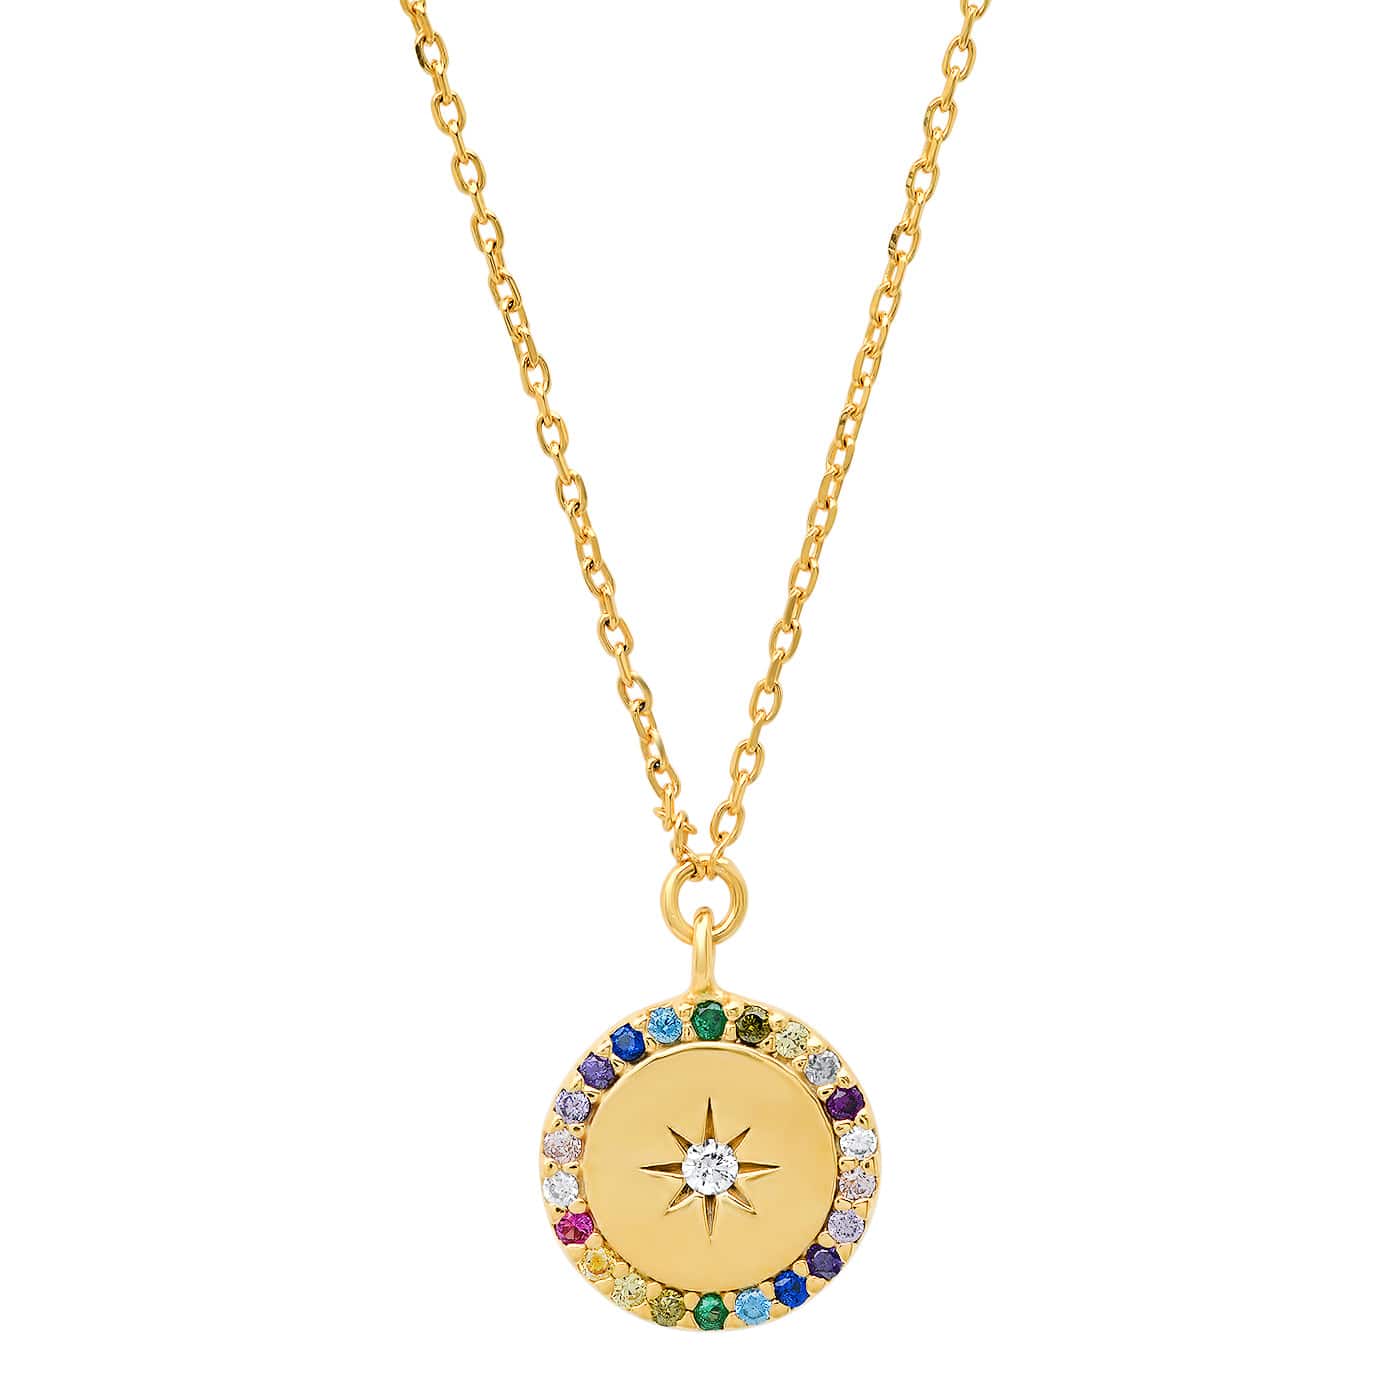 TAI JEWELRY Necklace Rainbow Pendant With Star Center